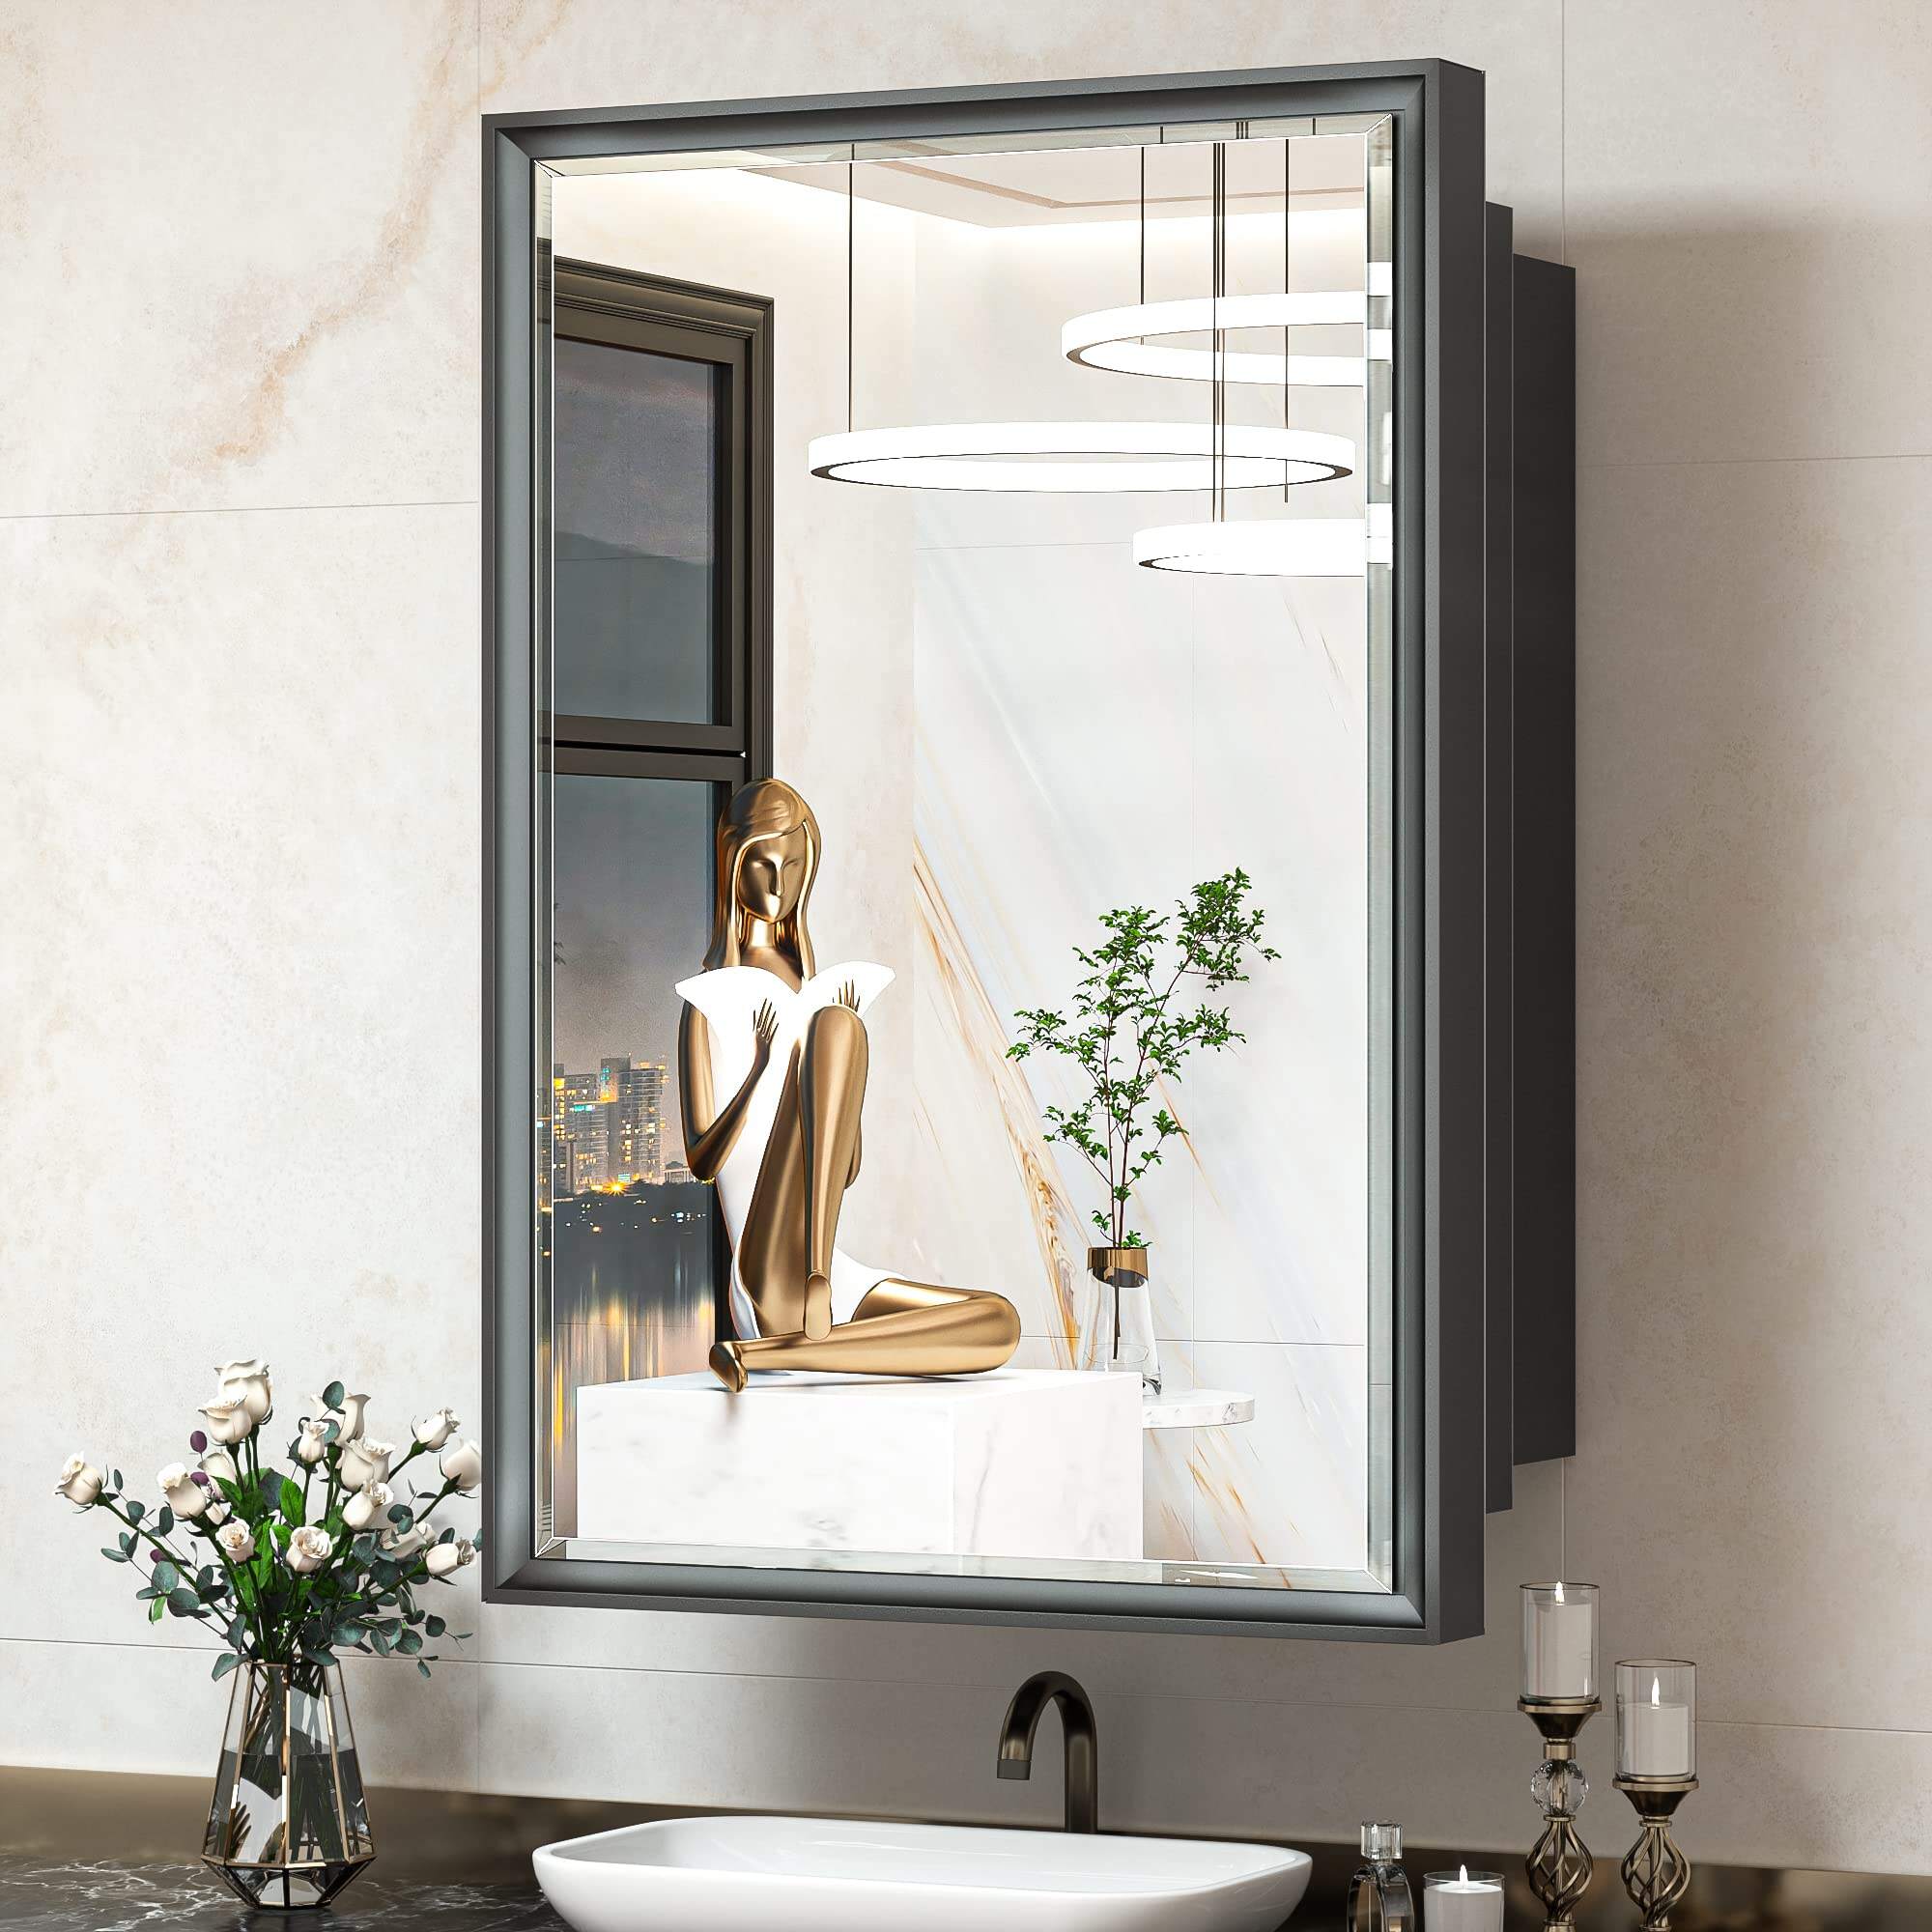 Foshan Haohan Smart Home Co., Ltd. Recessed Medicine Cabinet 24x36 Bathroom Vanity Mirror Black Metal Framed Surface Wall Mounted with Aluminum Alloy Beveled Edges Design 1 Door for Modern Farmhouse